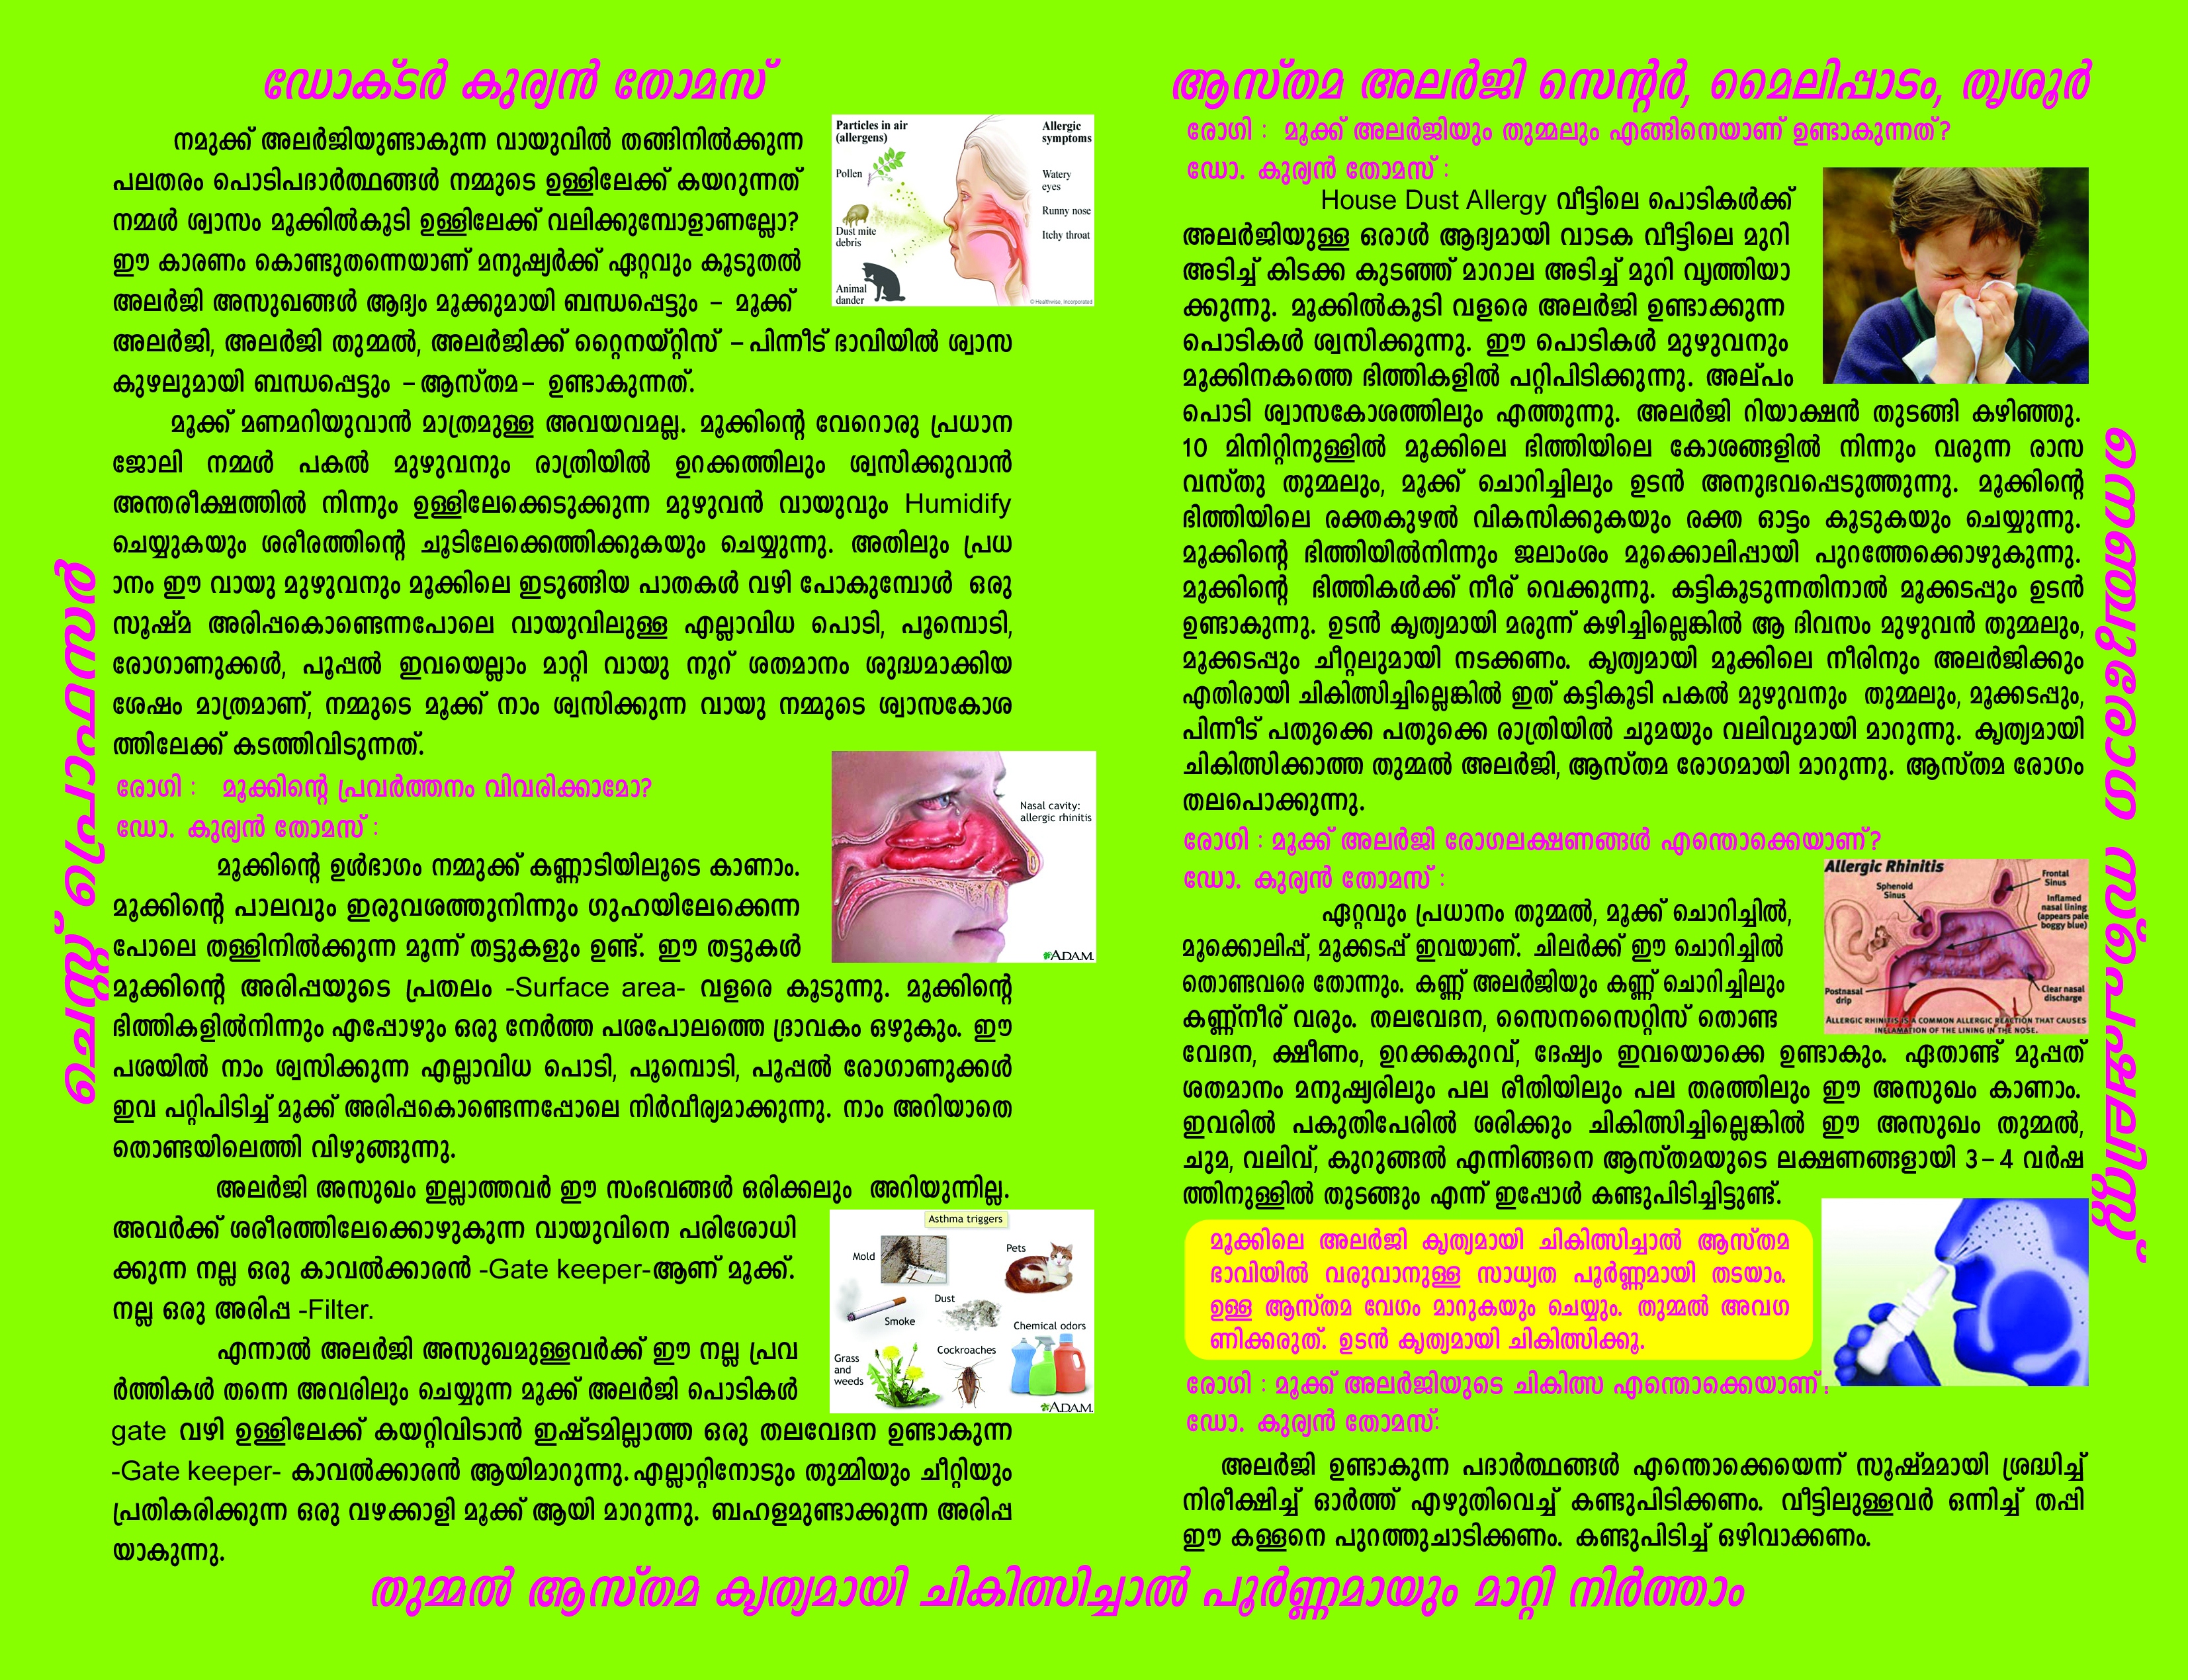 Pulmonology Asthma Allergy Centre Thrissur Sneezing information